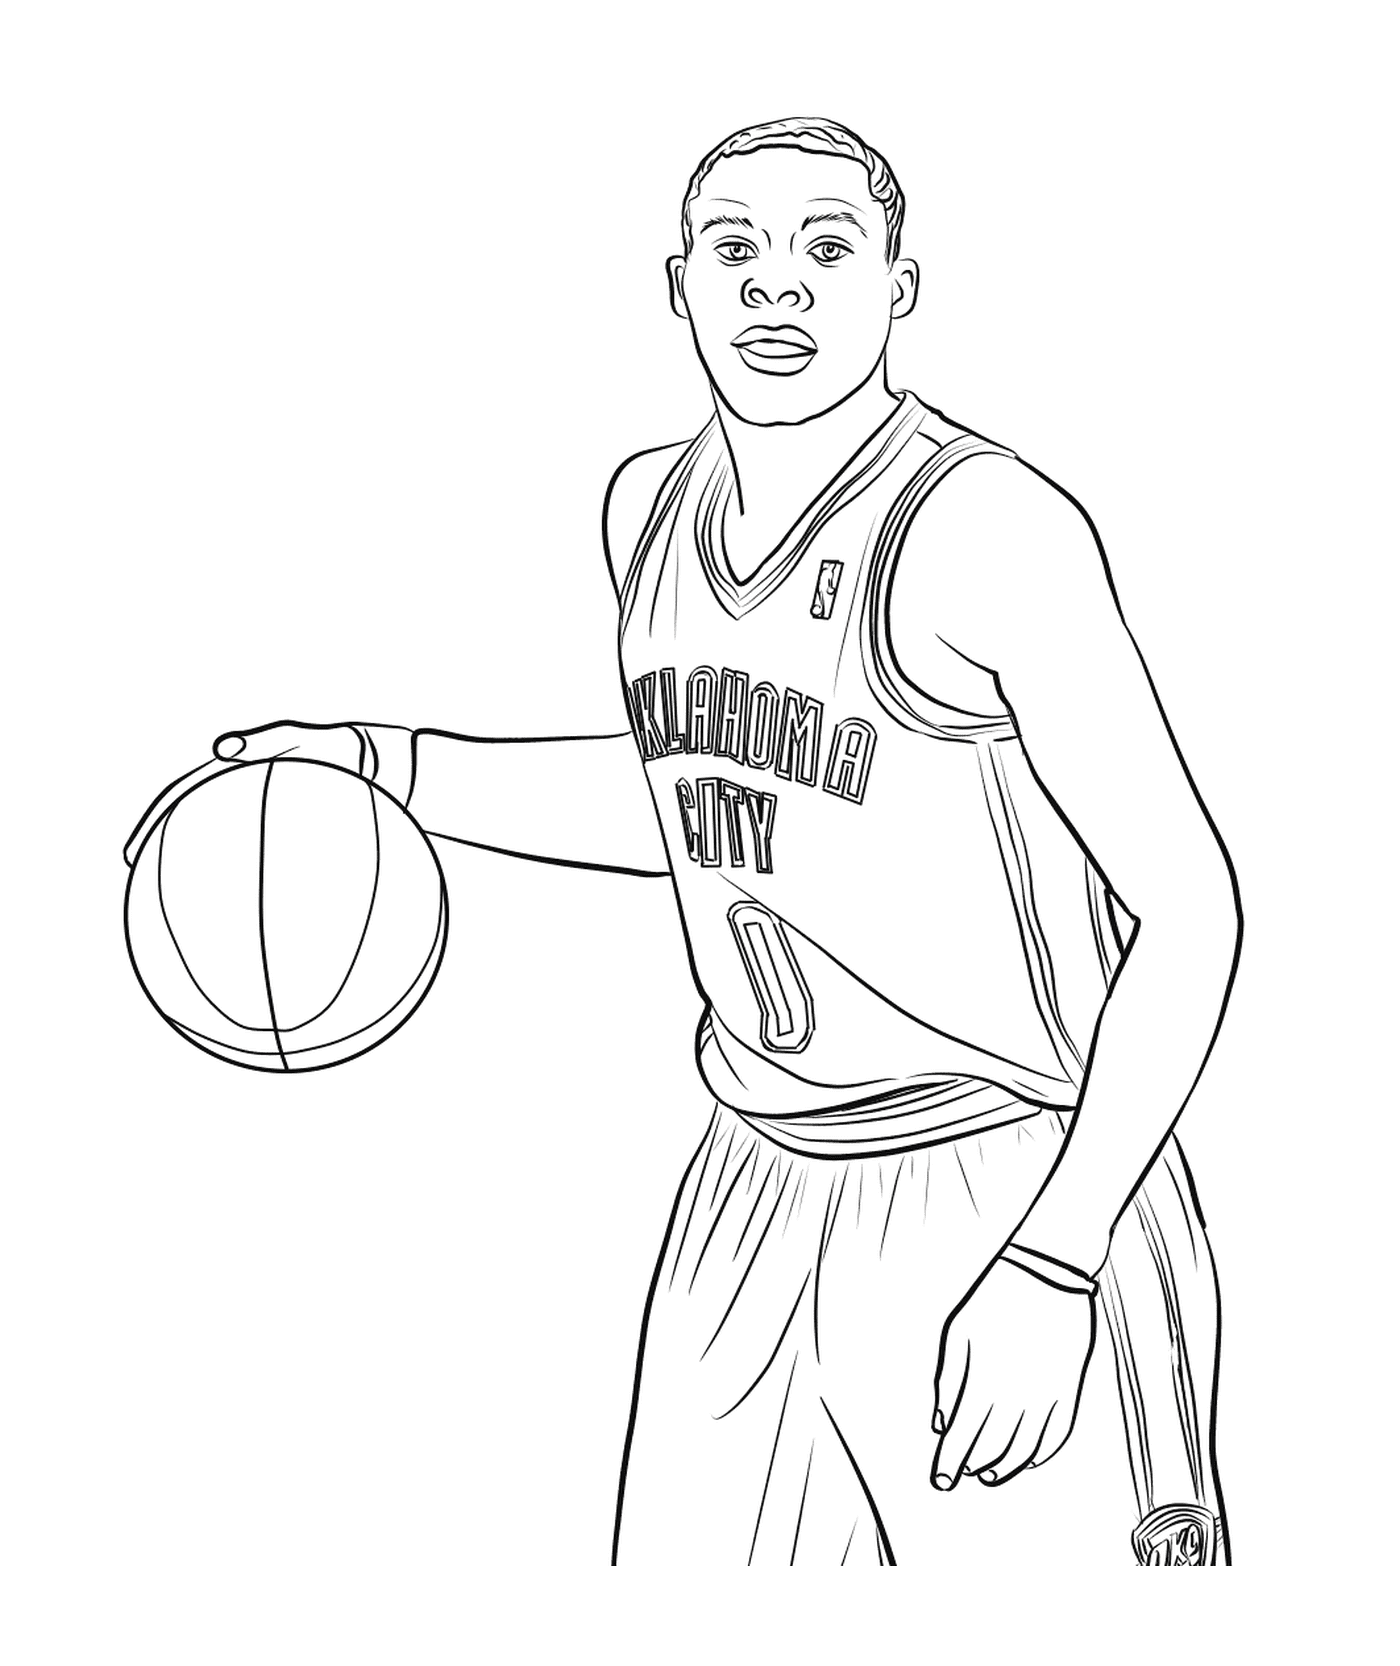  Russell Westbrook, jugador de baloncesto 